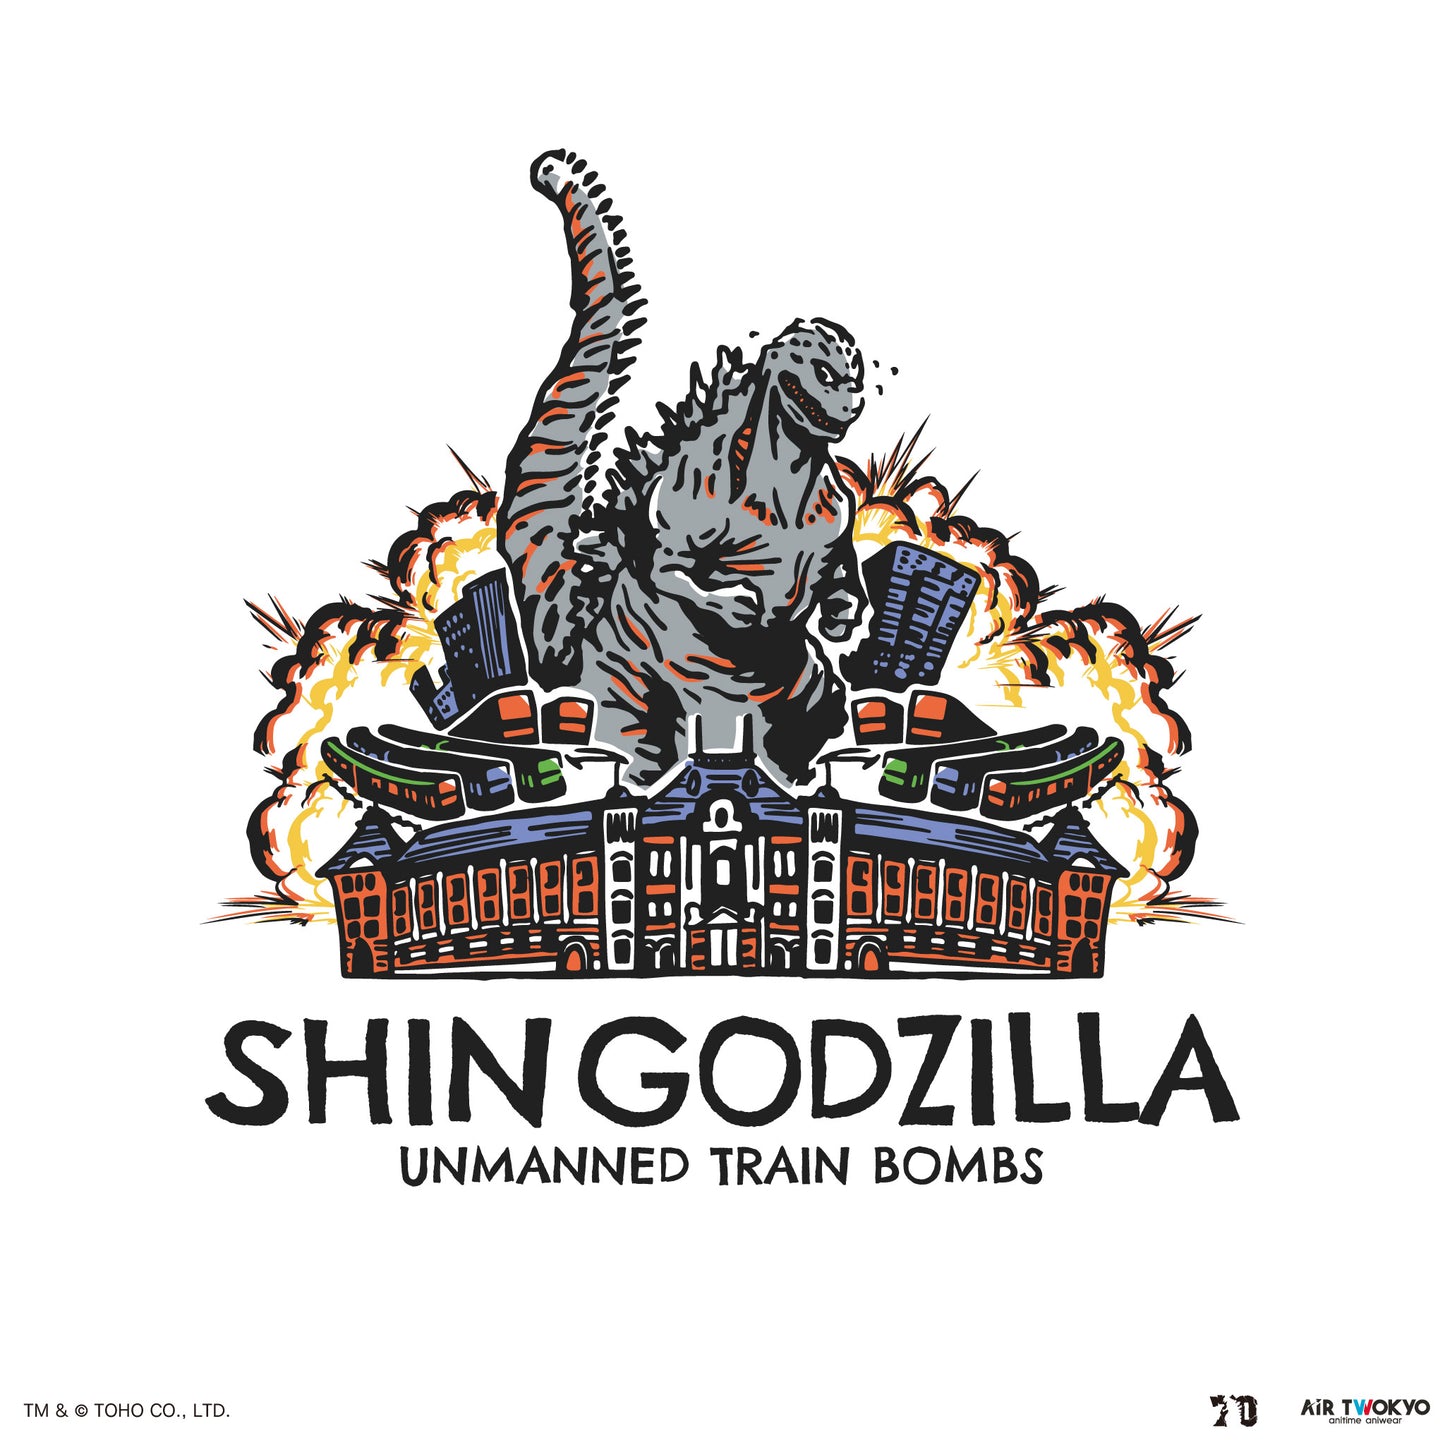 GODZILLA 70th Anniversary "SHIN GODZILLA" Scene Illustration T-shirt